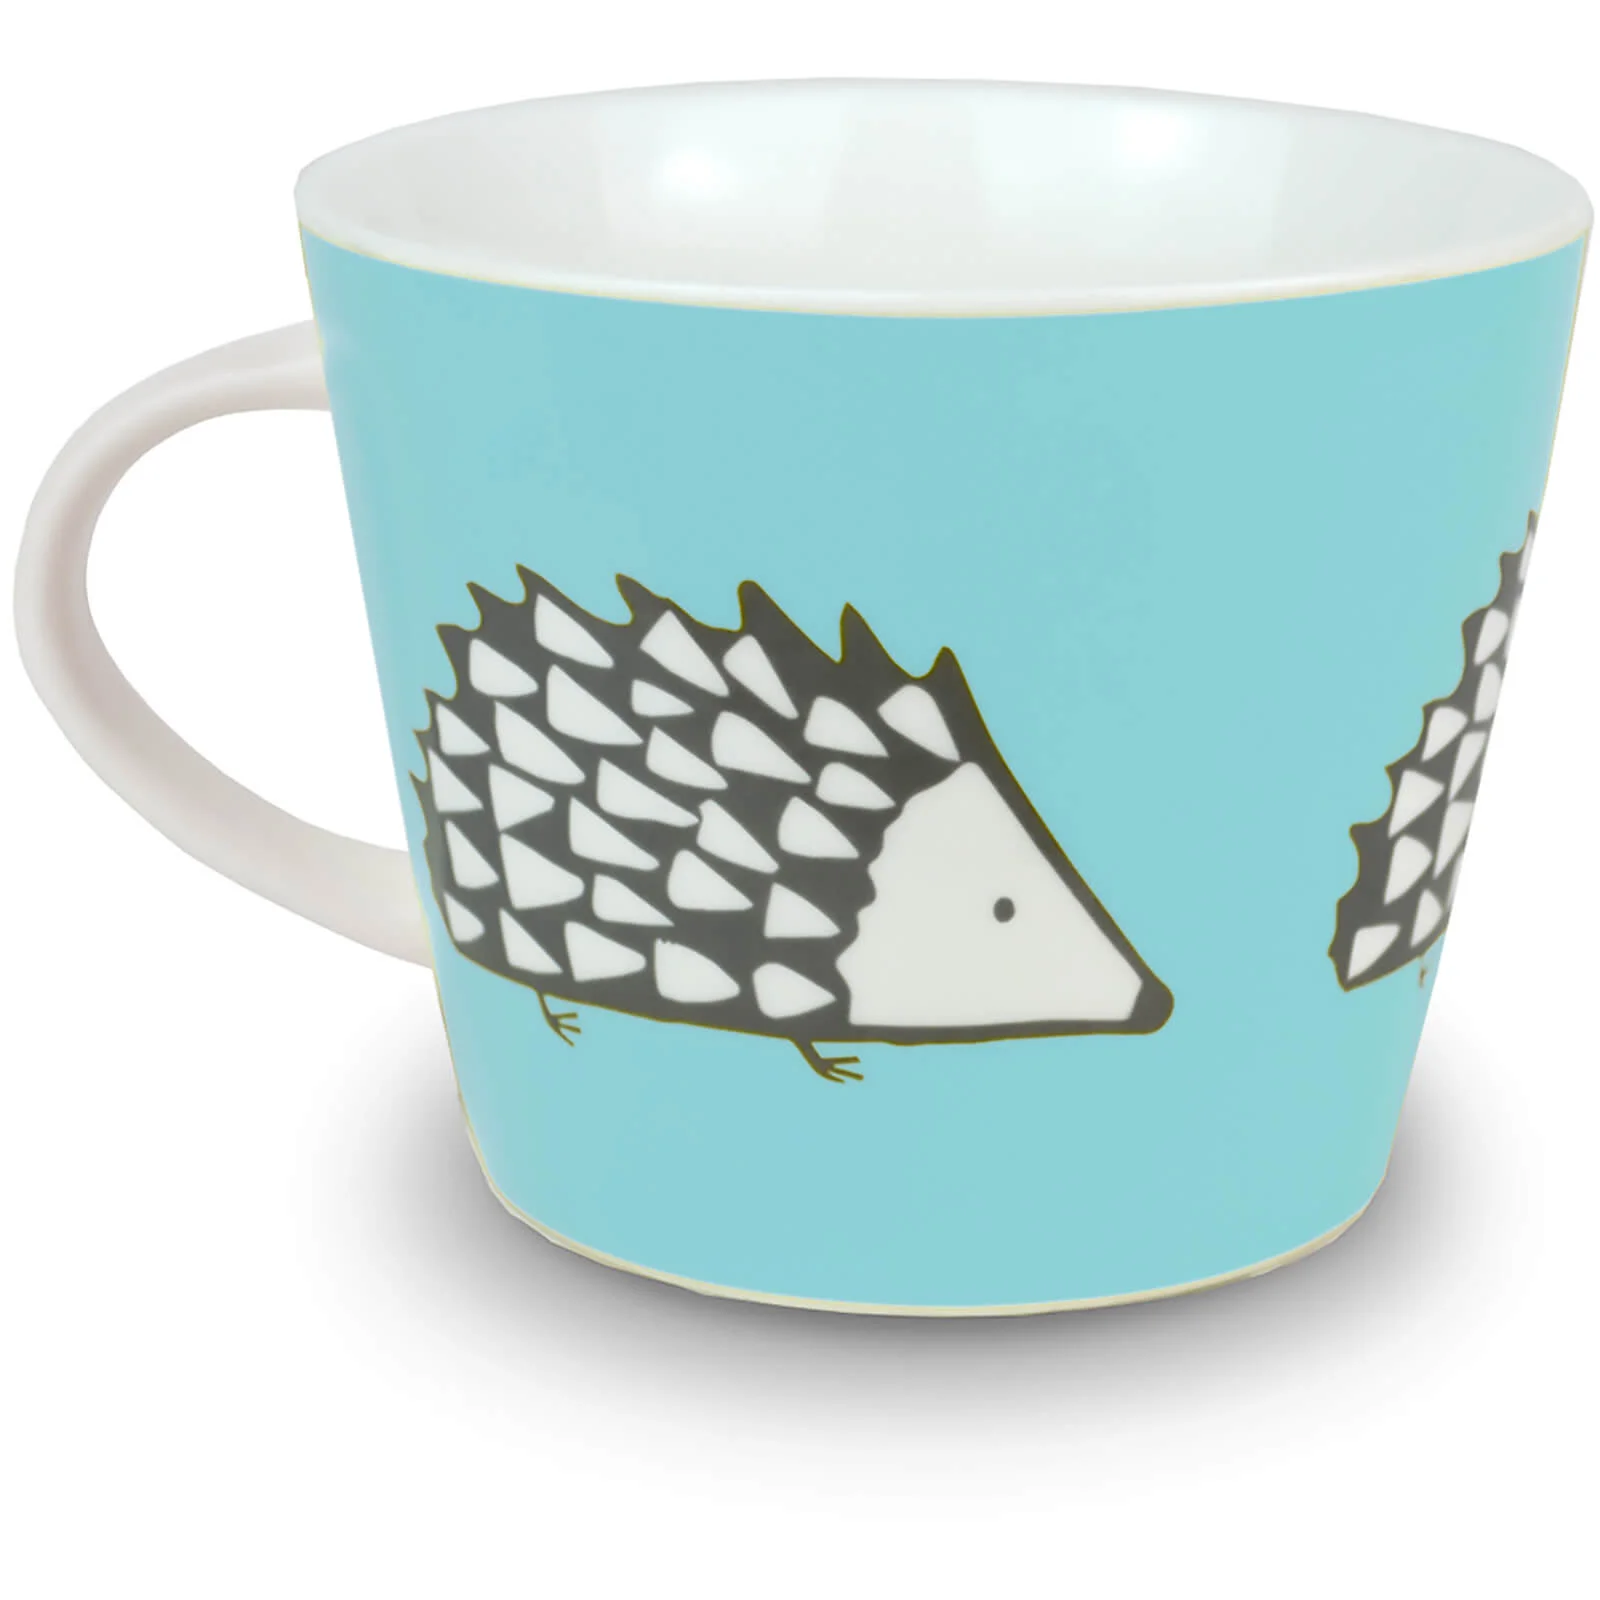 Scion Spike Hedgehog Mug - Blue Image 1